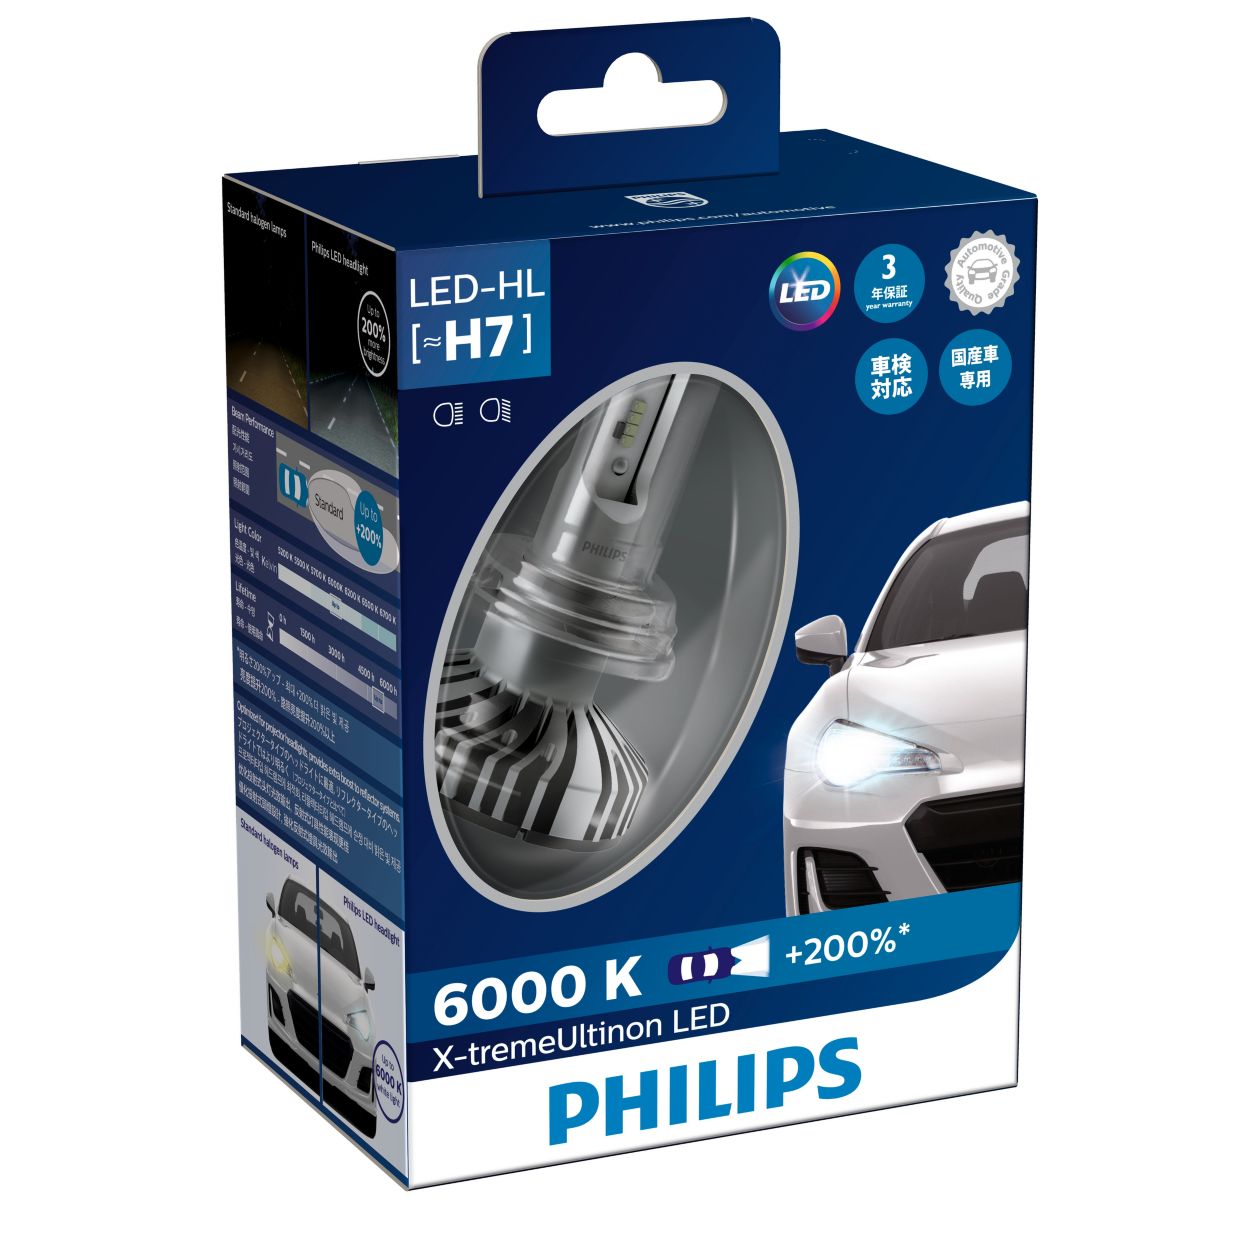 X-tremeUltinon LED car headlight bulb 12985BWX2 | Philips